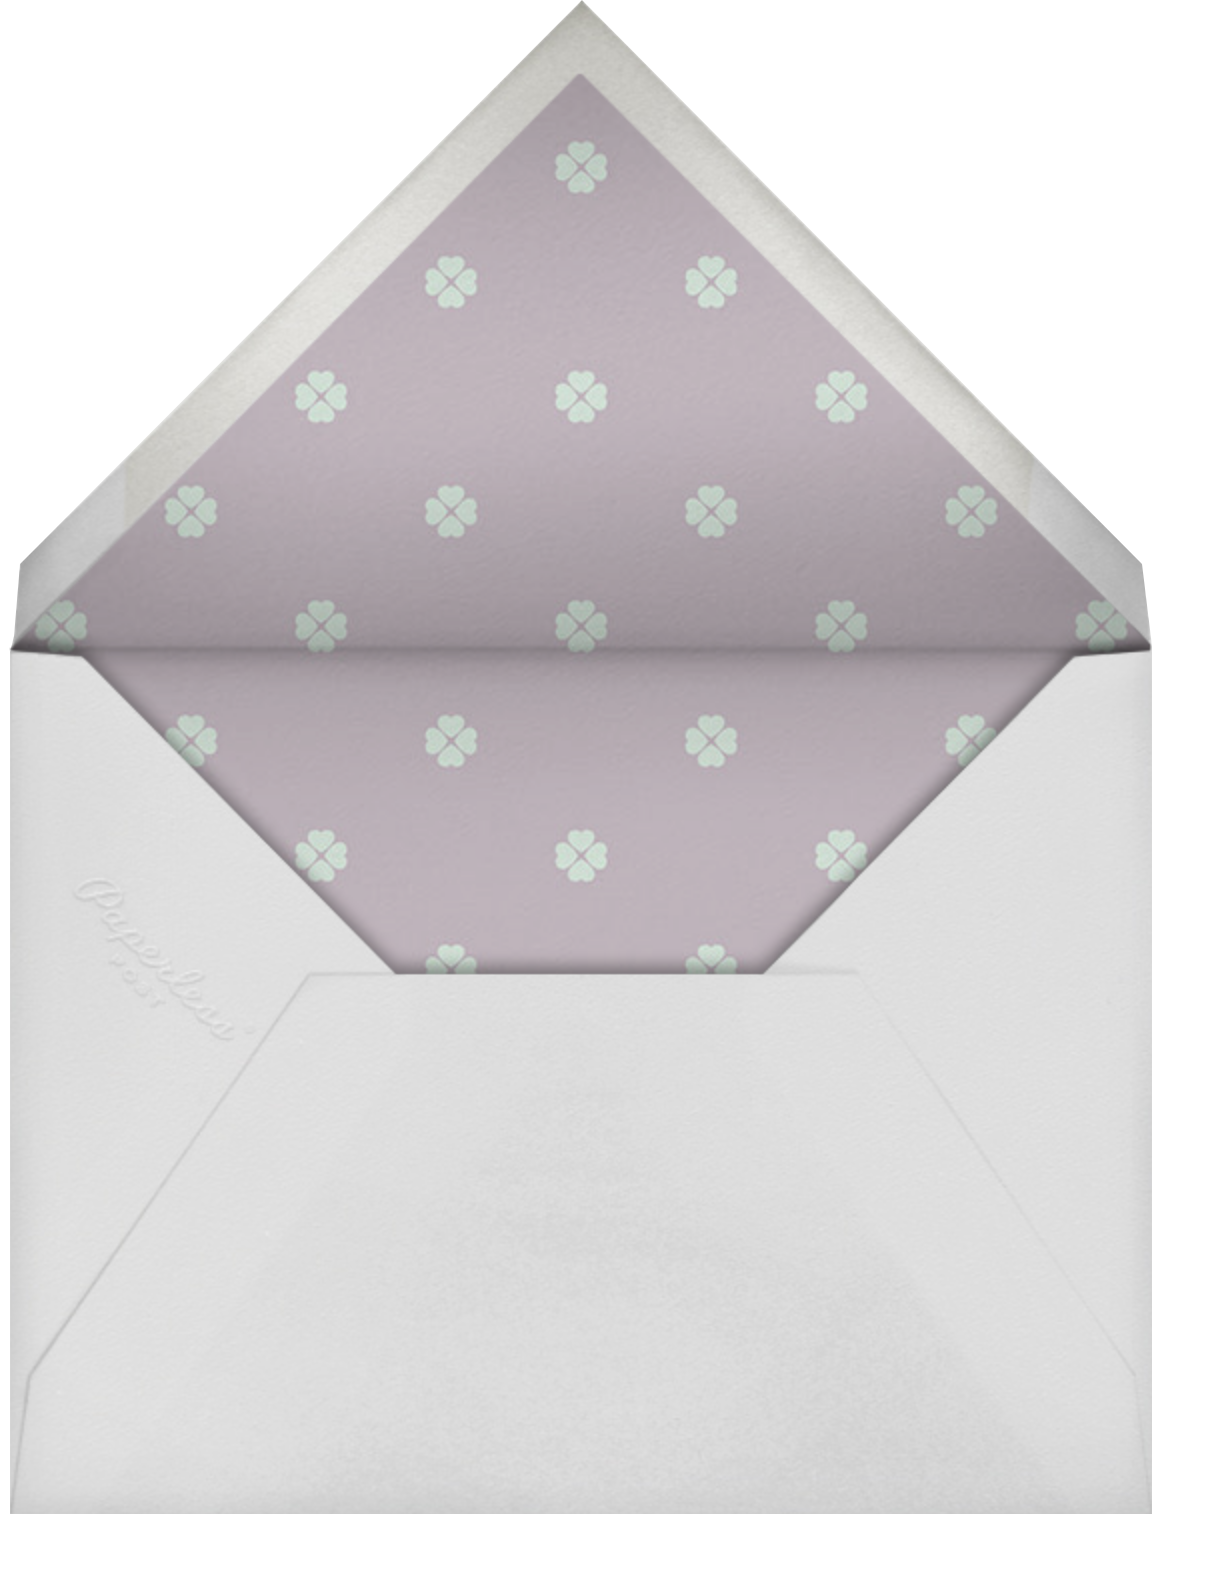 Colorblocked Stripes - Lilac/Mint - kate spade new york - Envelope